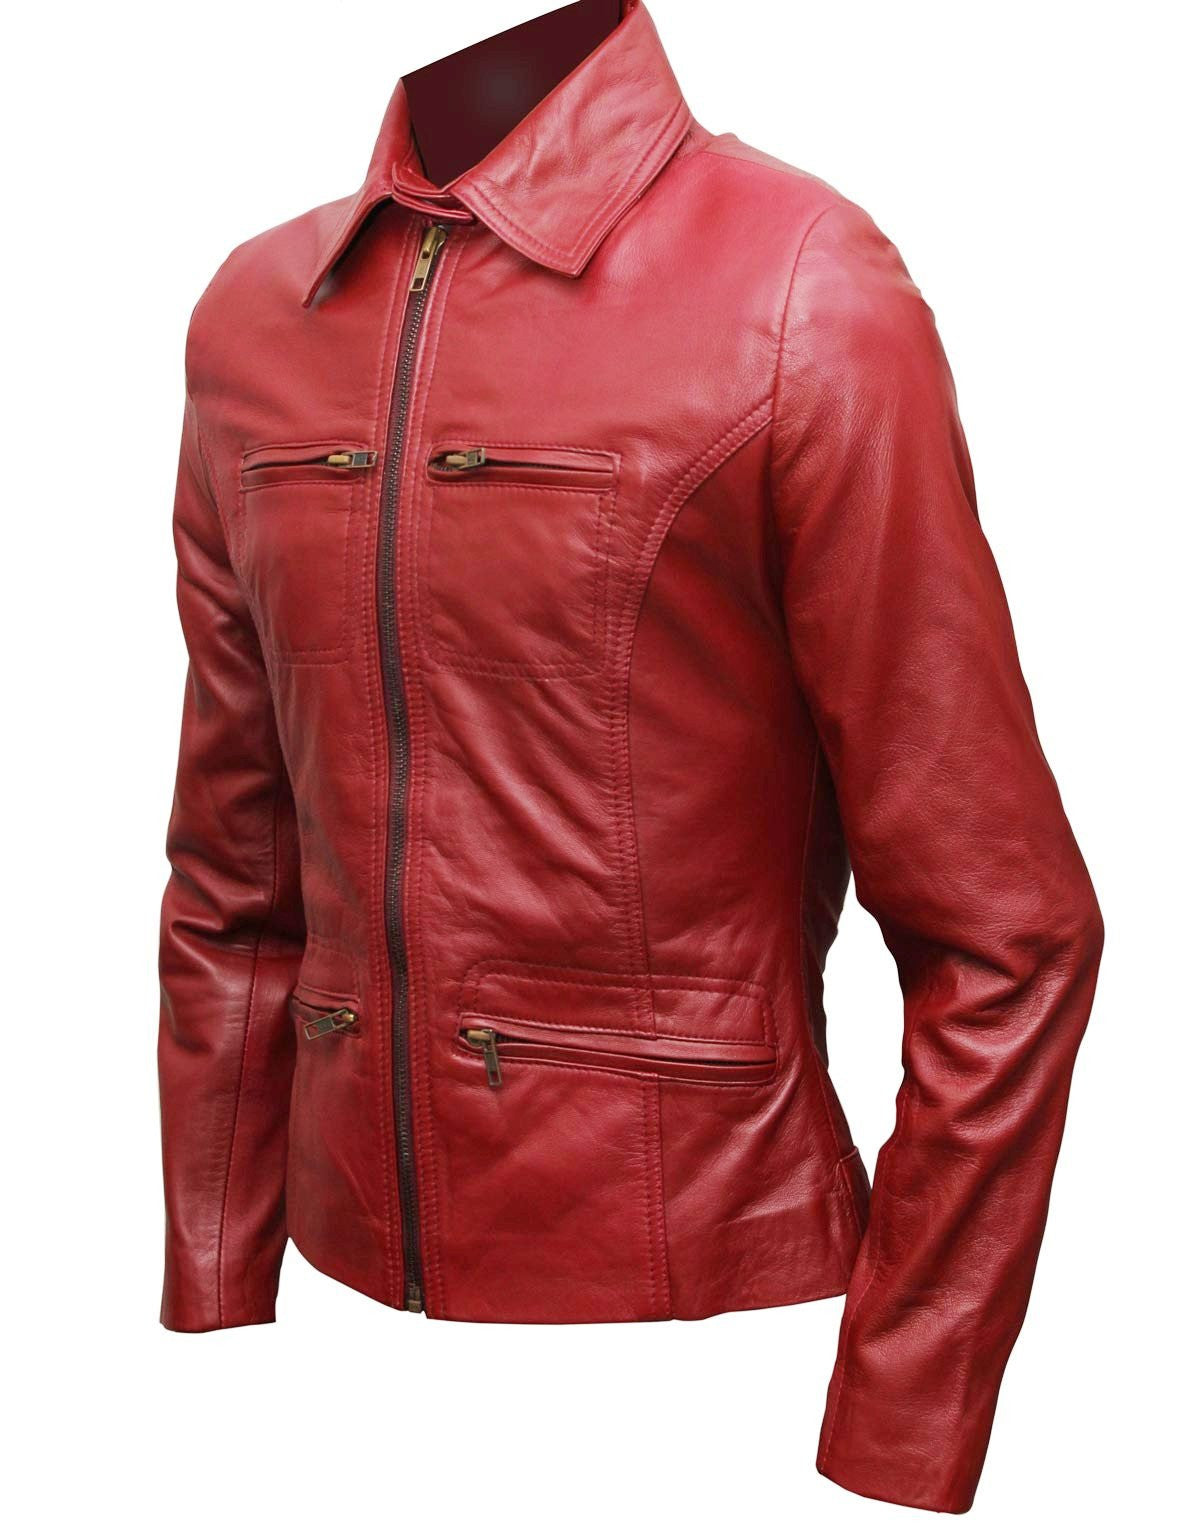 Upon Time Jacket - Emma Swan Leather Jacket – The Film Jackets